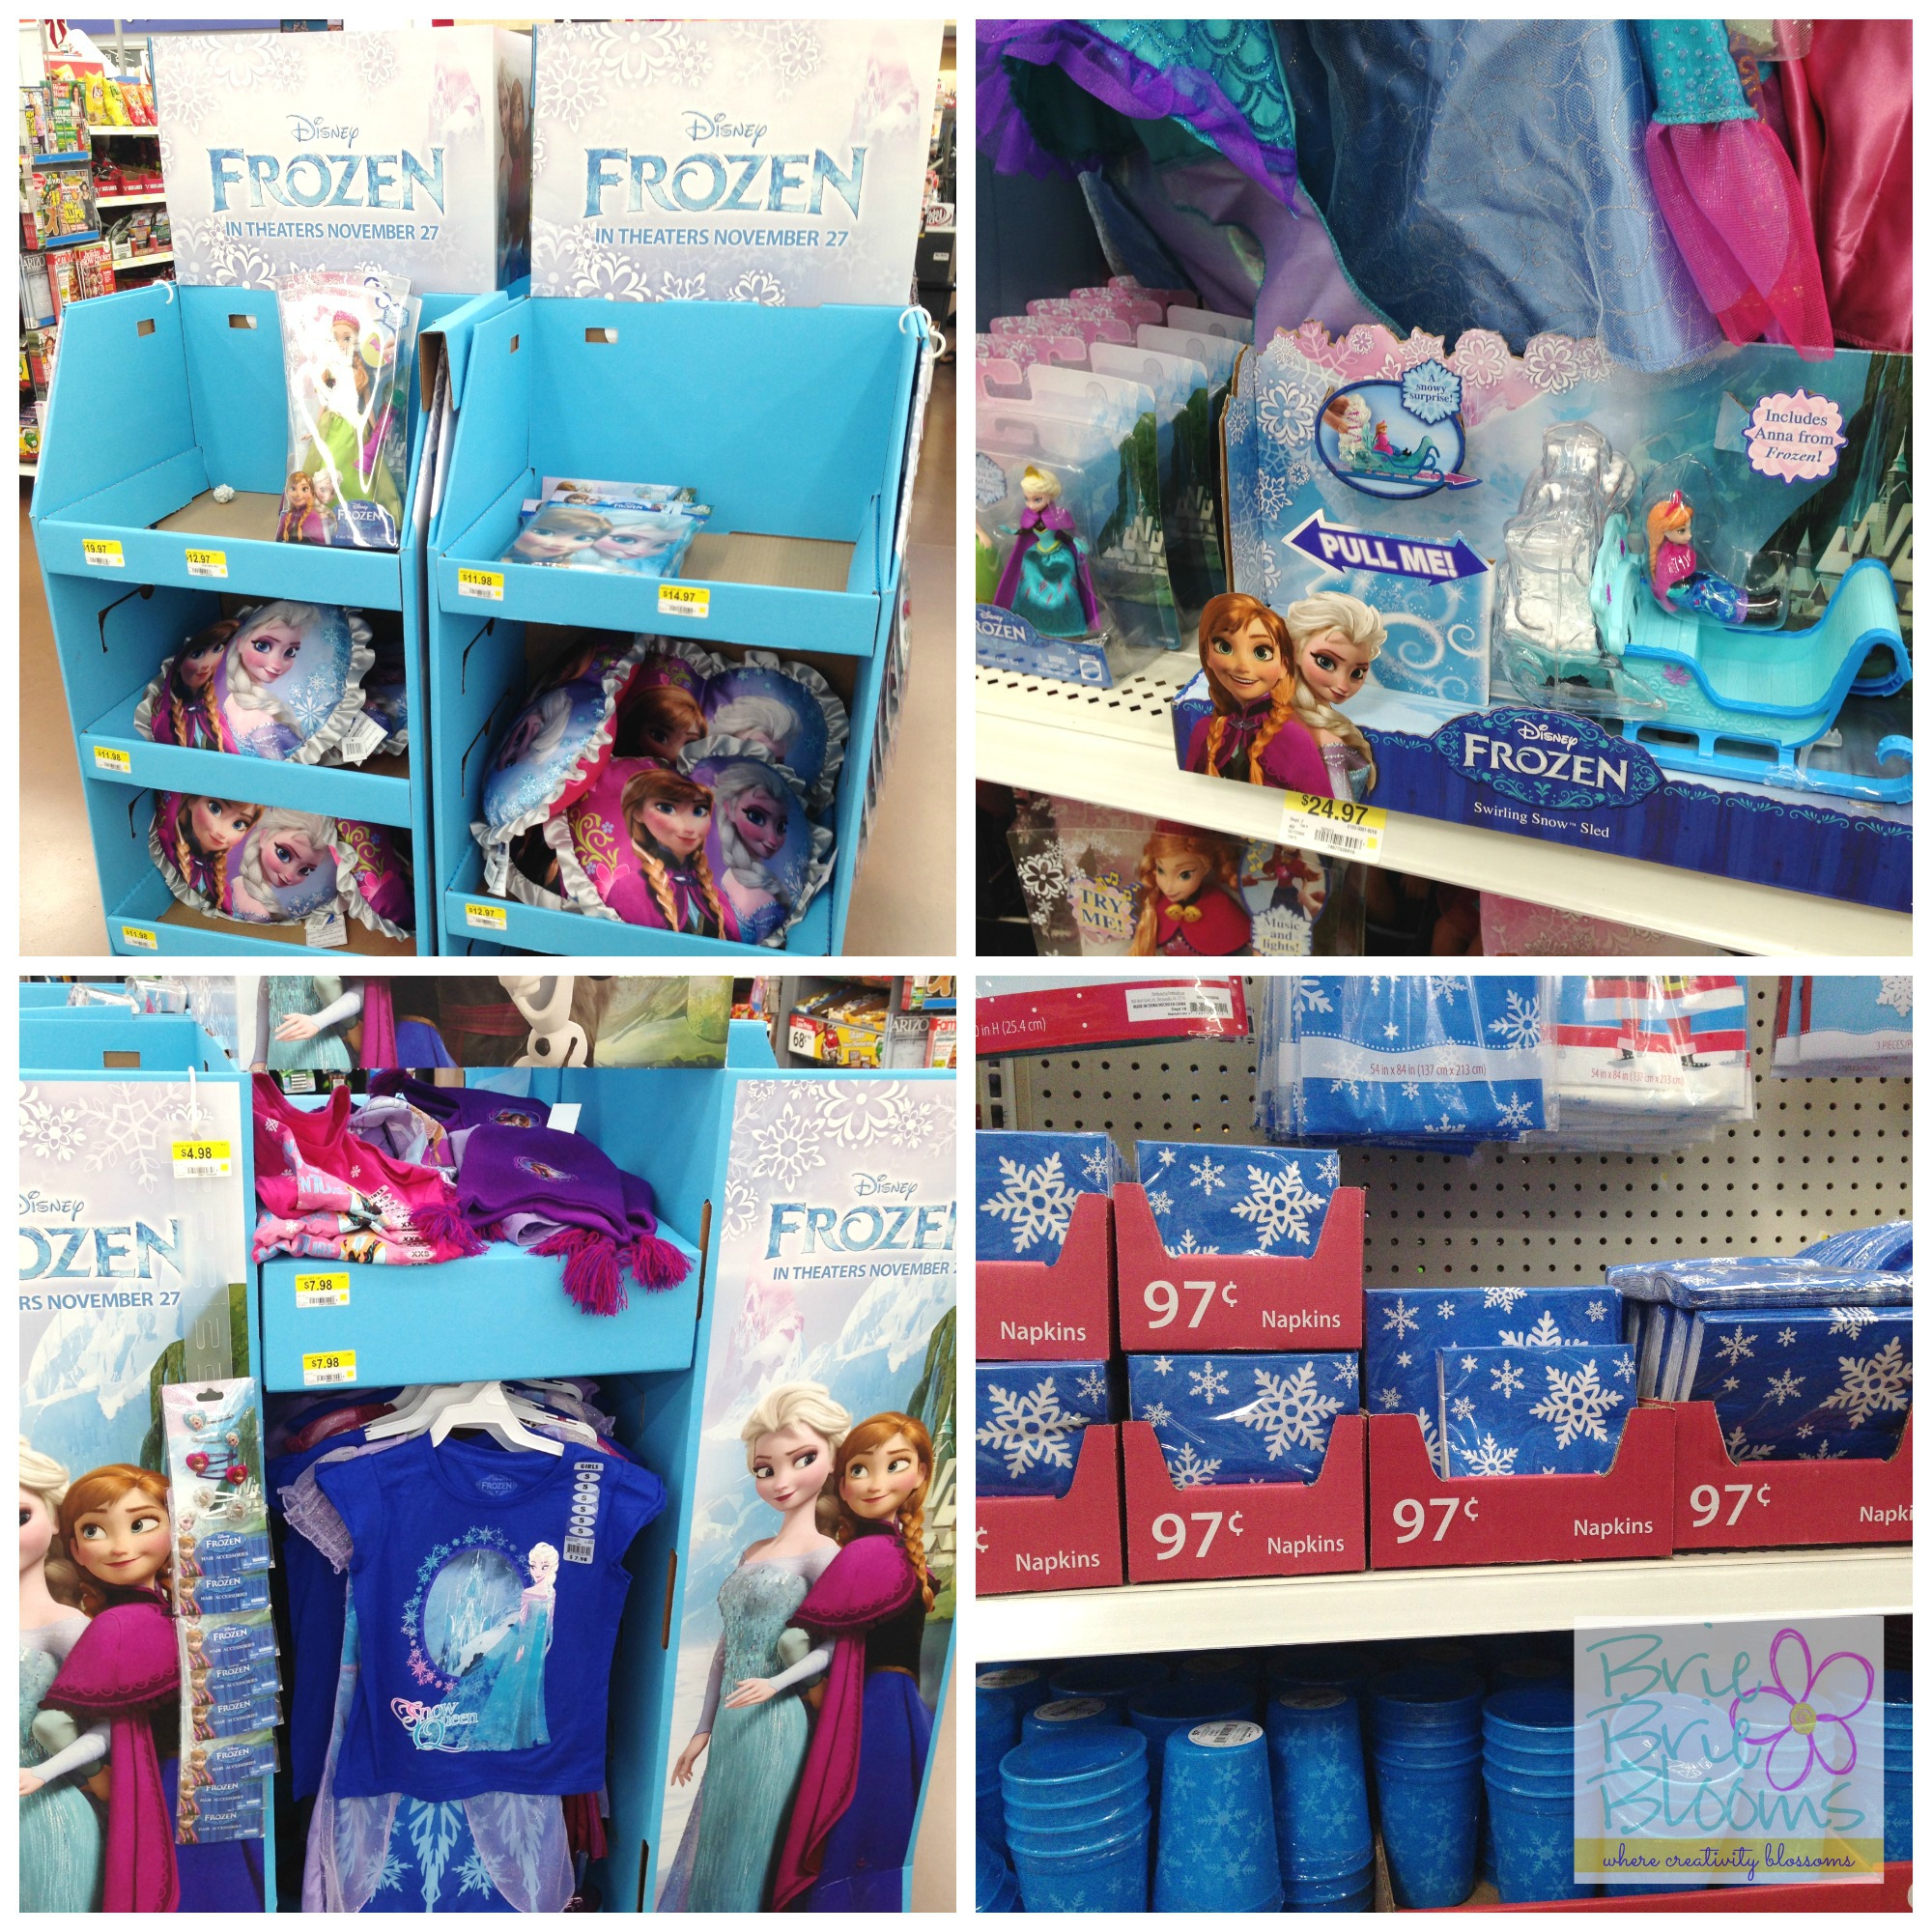 FROZEN merchandise at Walmart #FrozenFun #shop #cbias